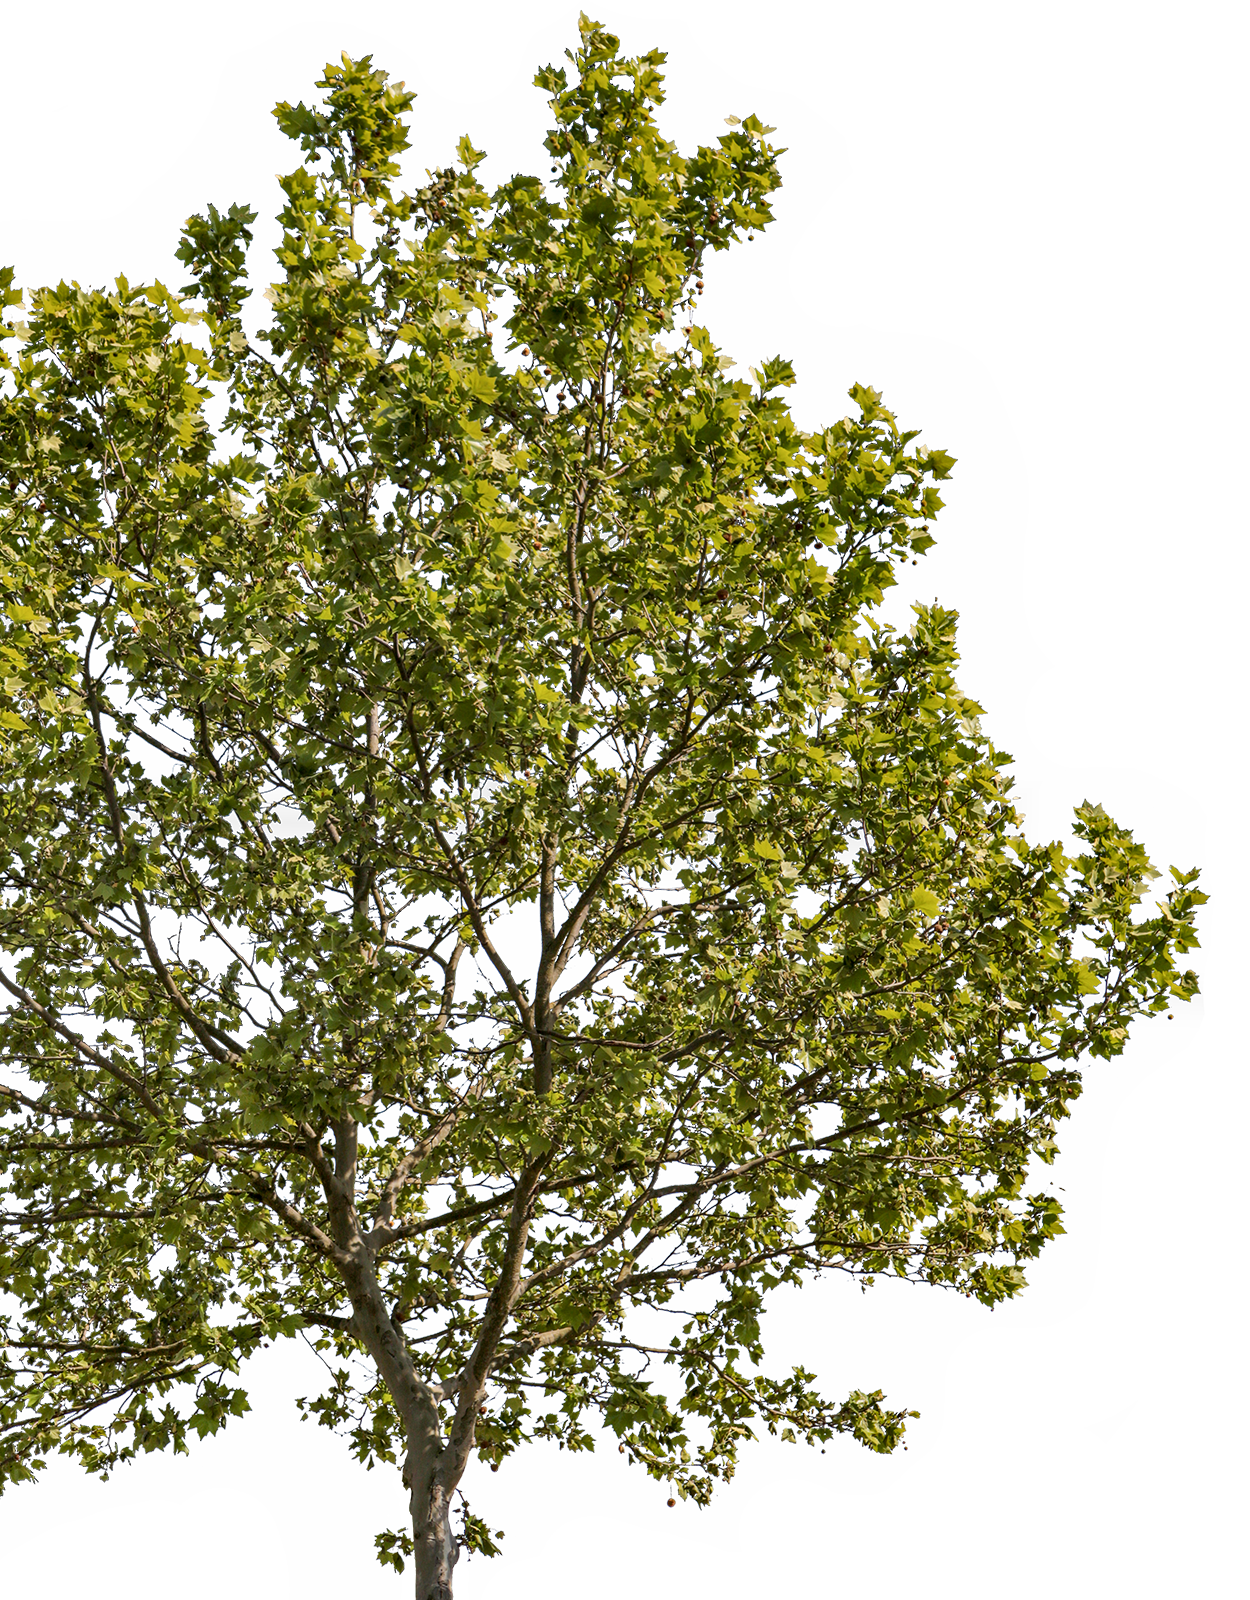 Platanus acerifolia m15 - cutout trees